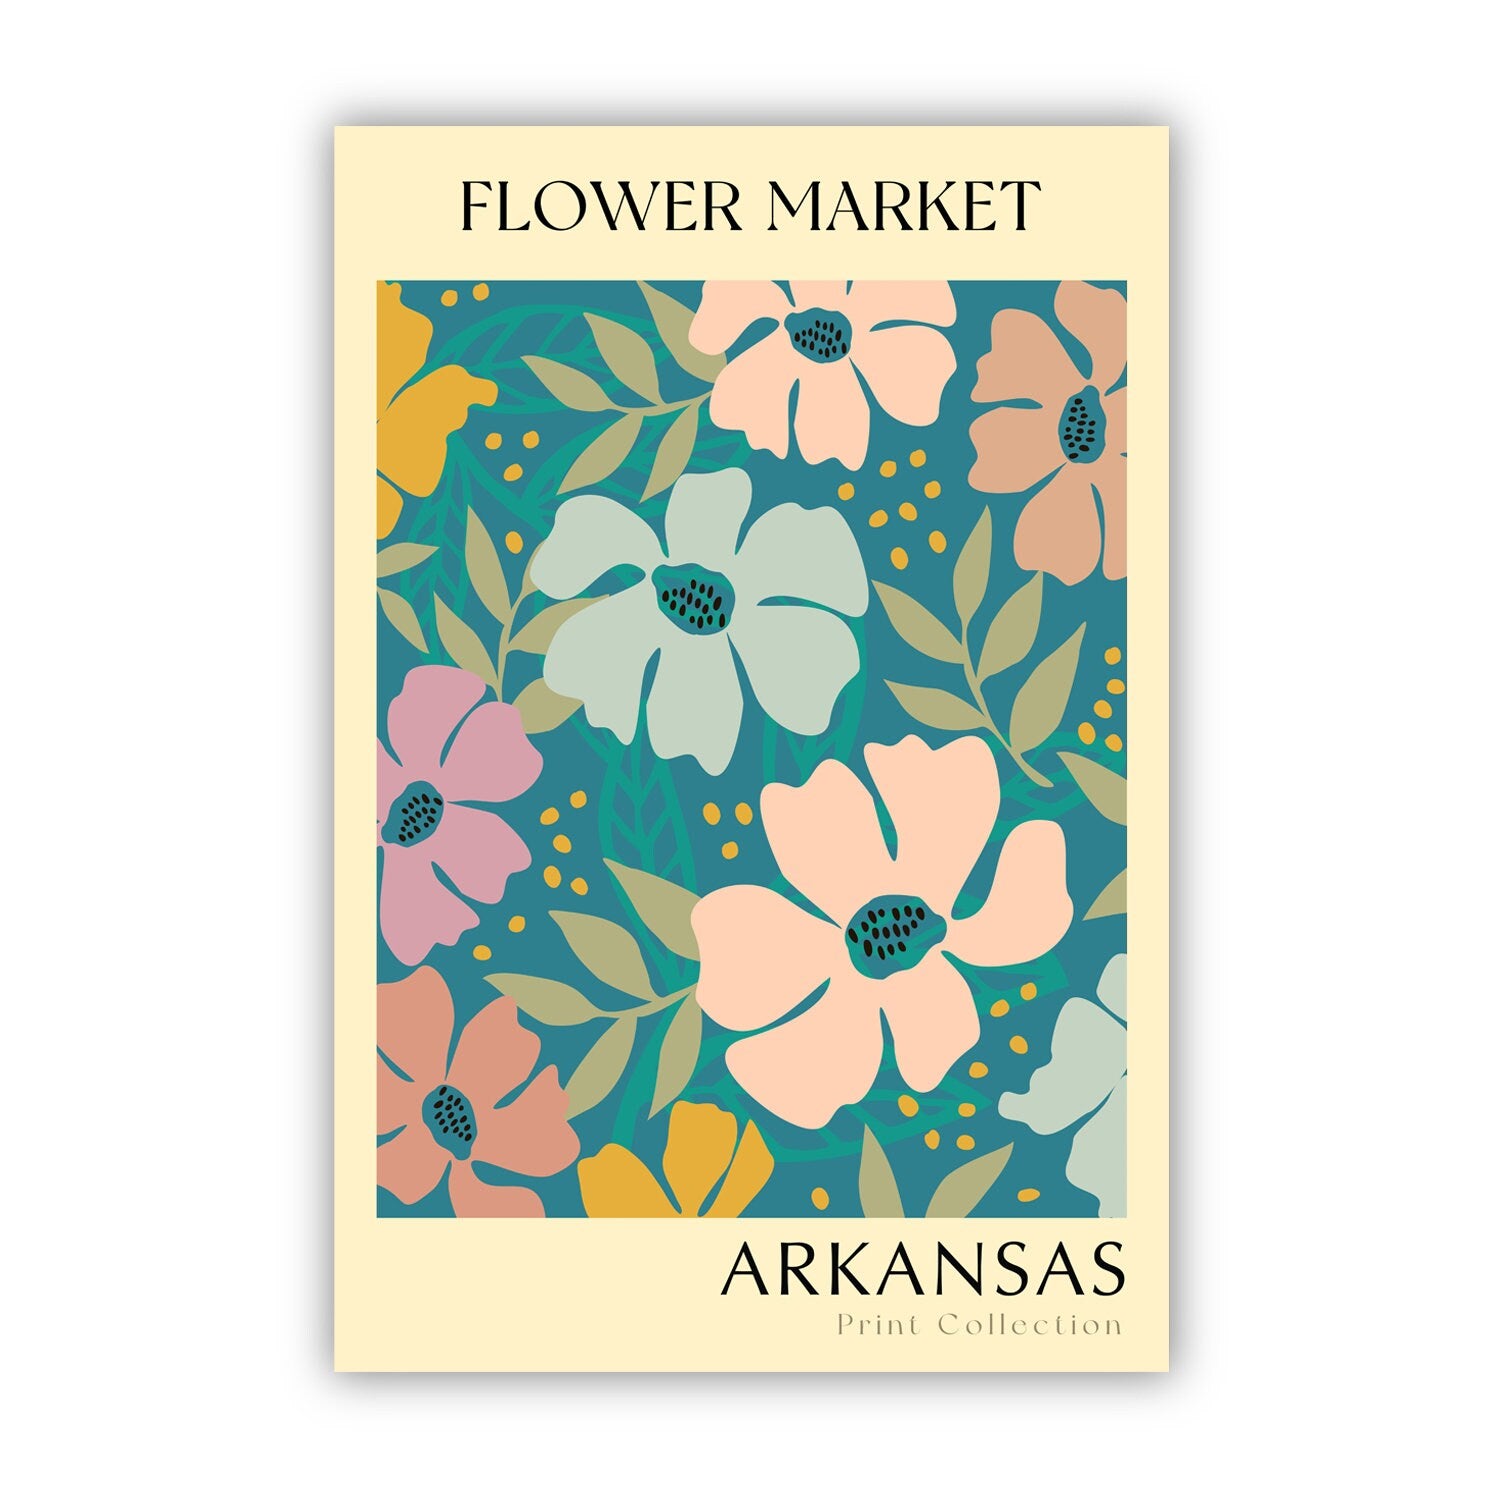 Arkansas State flower print, USA state poster, Arkansas flower market poster, Botanical poster, Natural poster artwork, Boho floral wall art